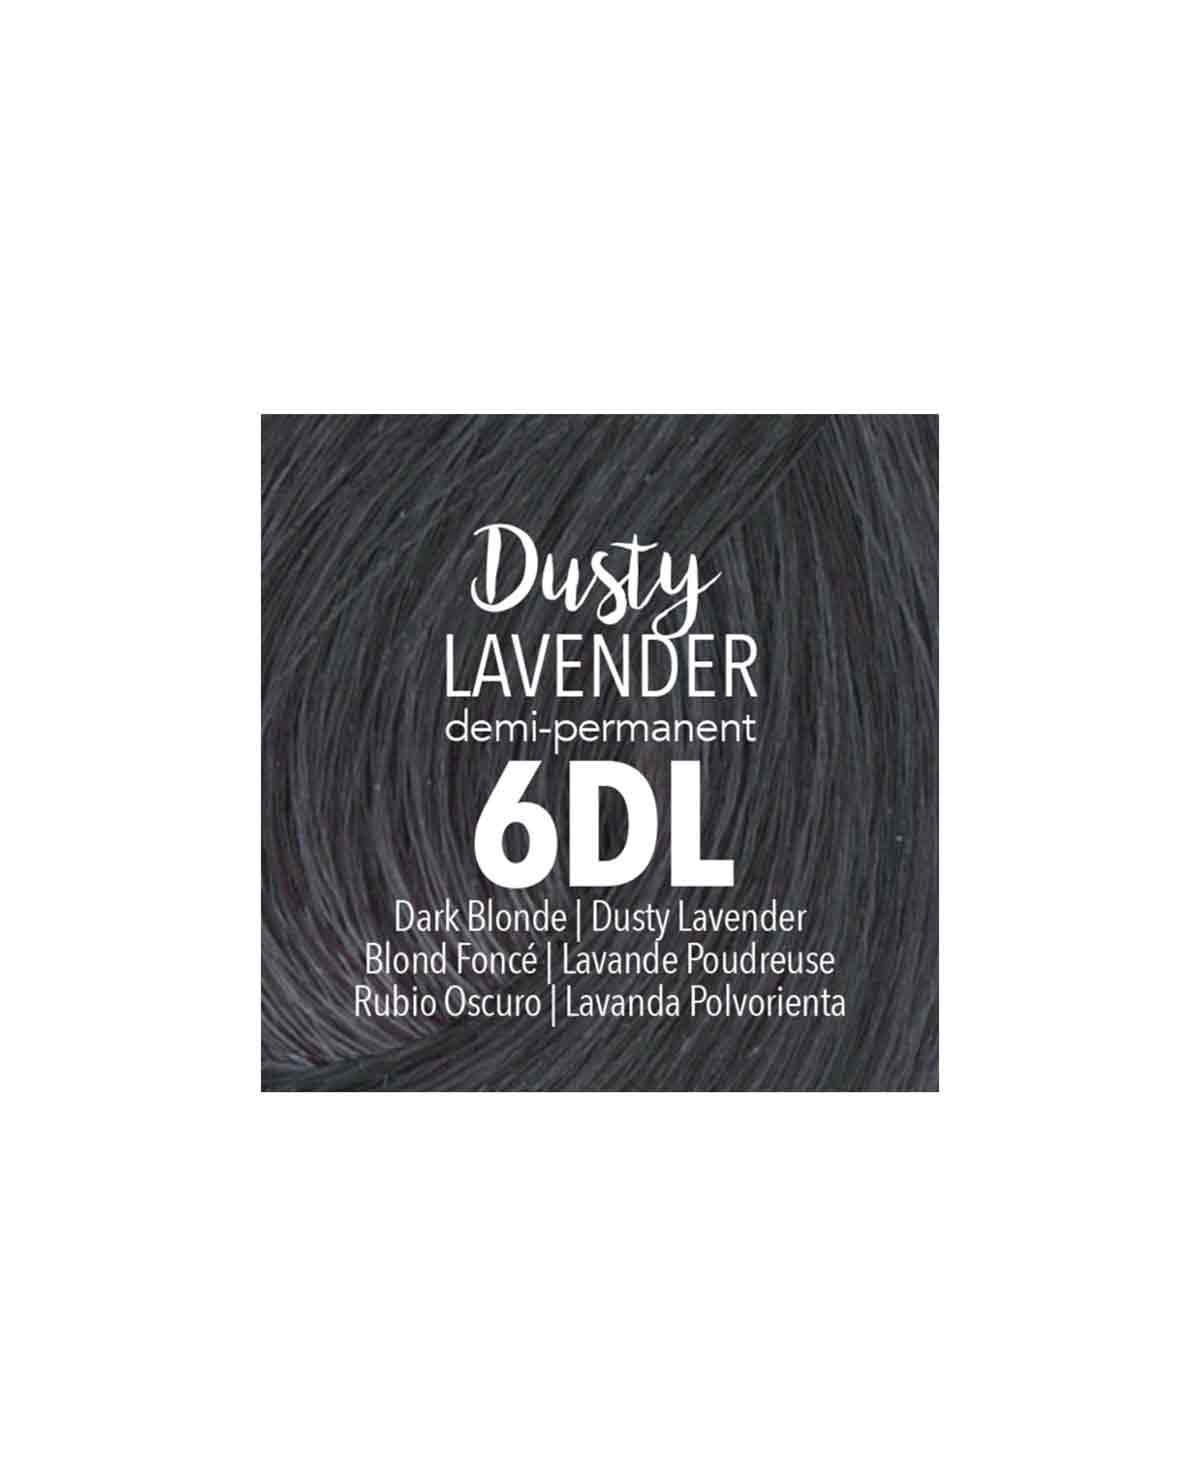 Mydentity - 6DL Dark Blonde Dusty Lavender Demi-P